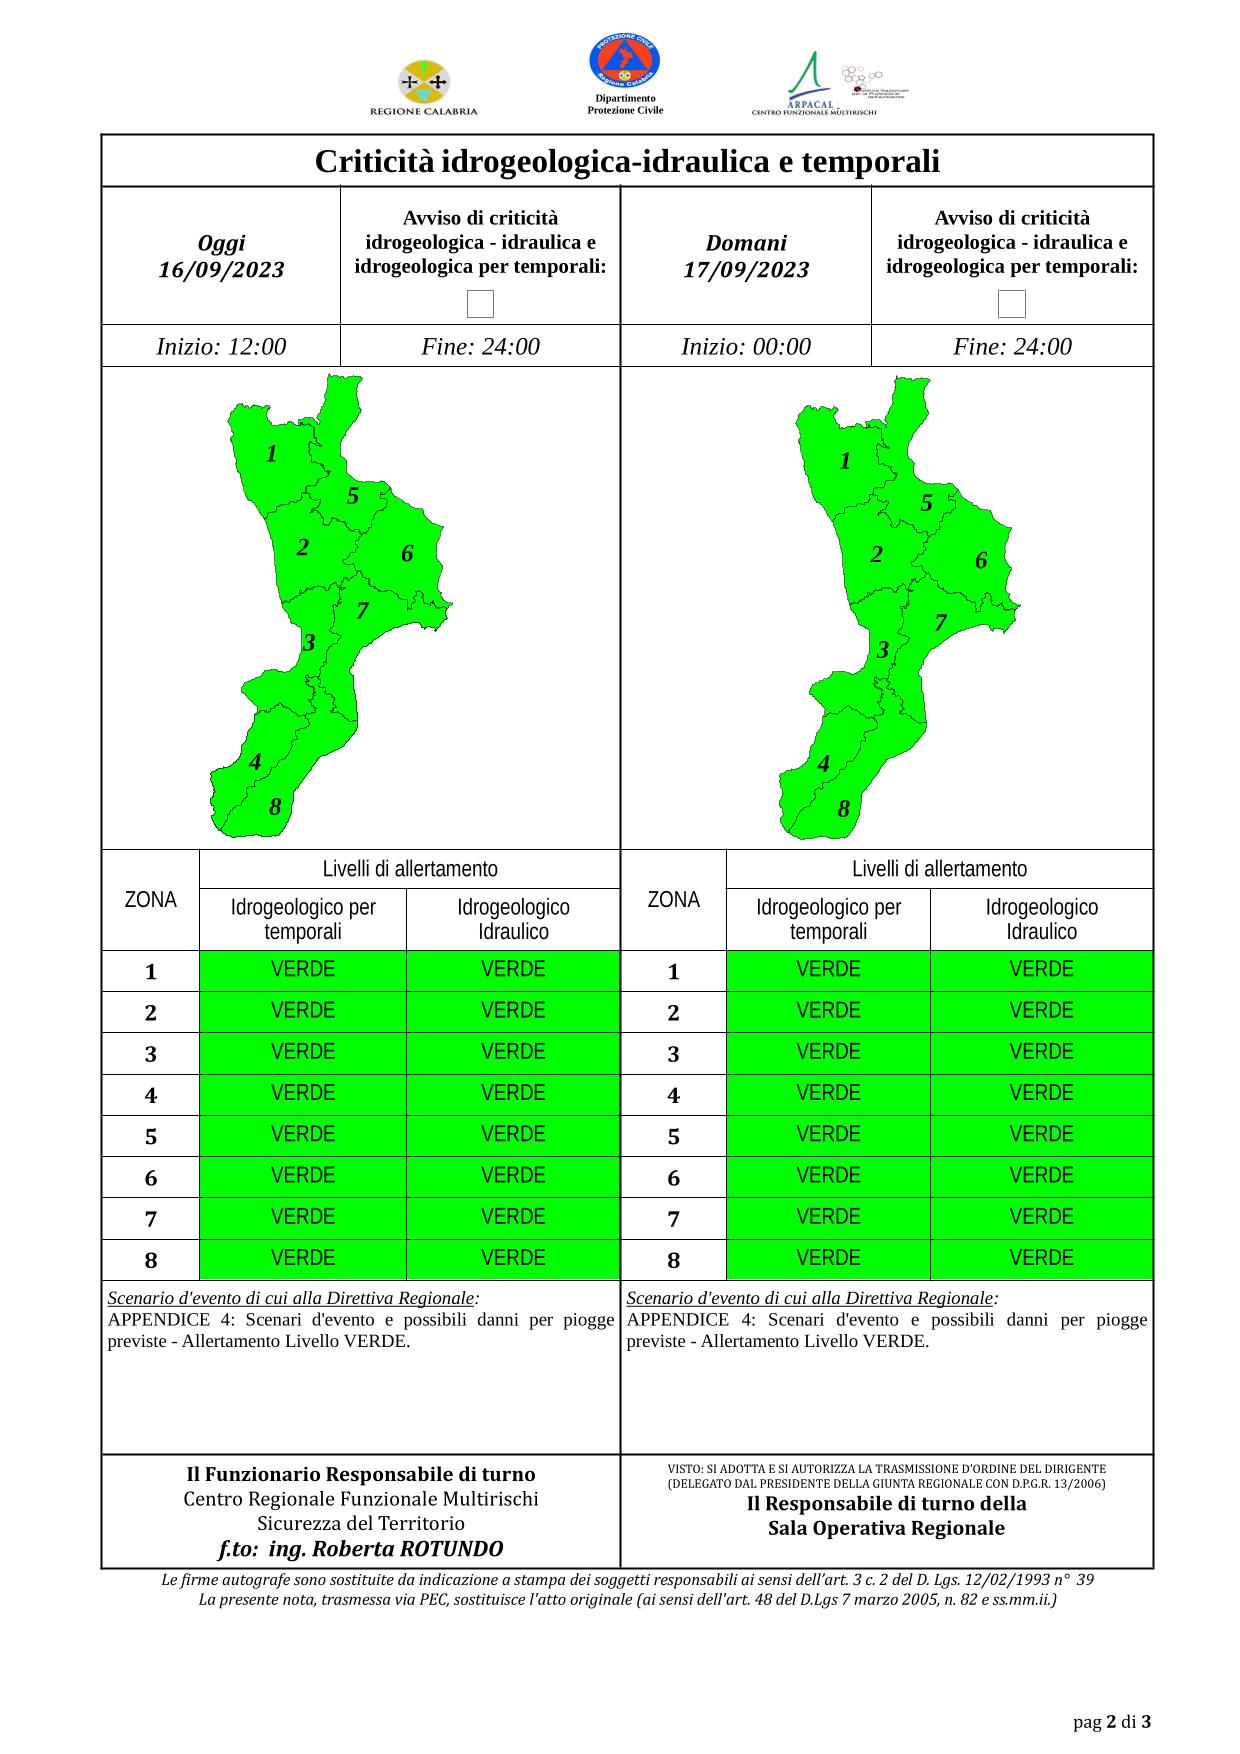 Criticità idrogeologica-idraulica e temporali in Calabria 16-09-2023